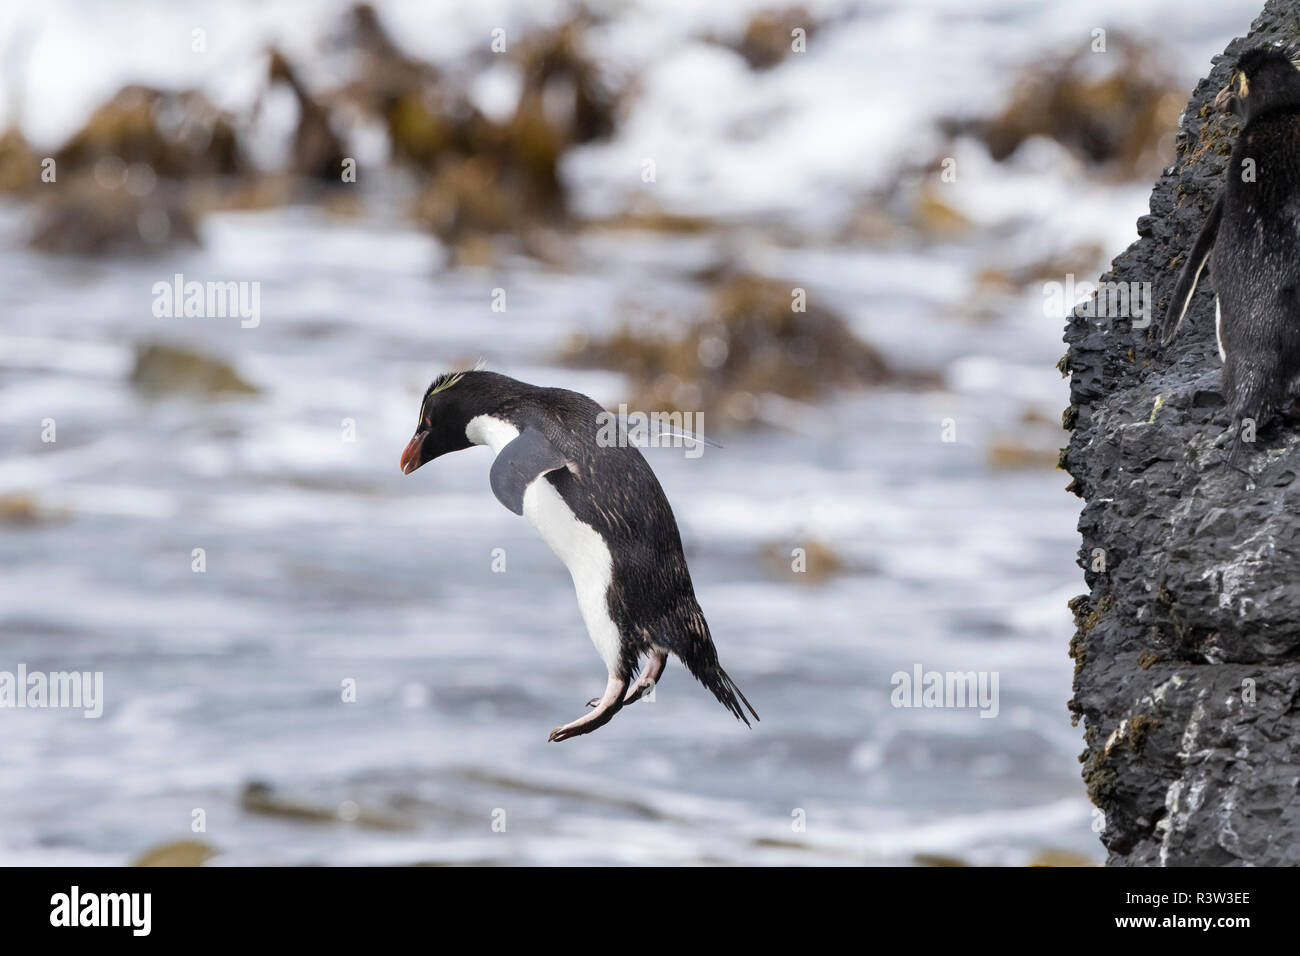 Rockhopper Penguin (Eudyptes chrysocome). Klettern an den Klippen ins Meer zu springen. Falklandinseln Stockfoto